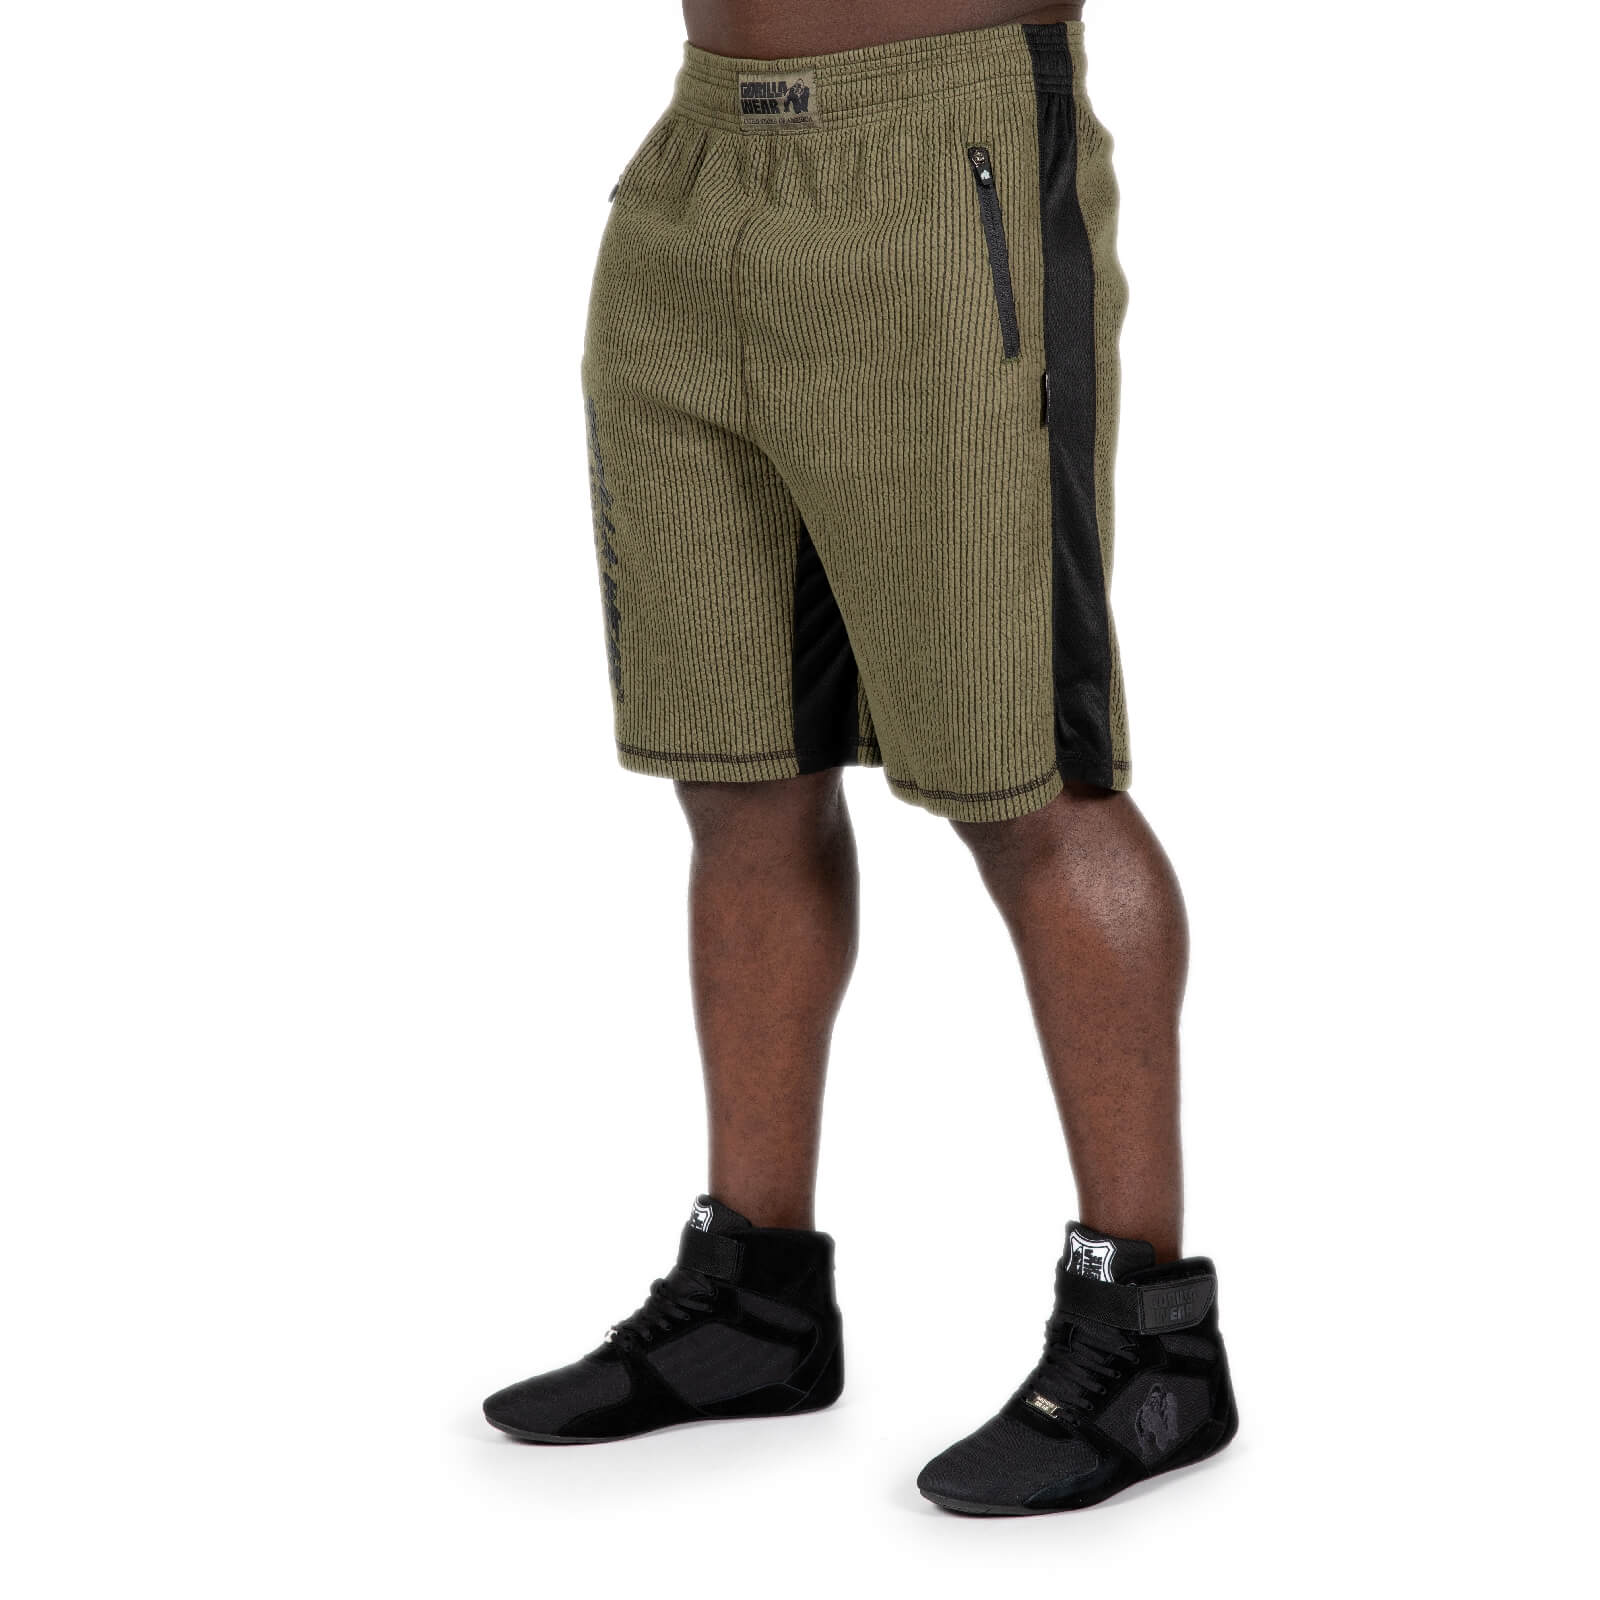 Augustine Old School Shorts, army green, Gorilla Wear